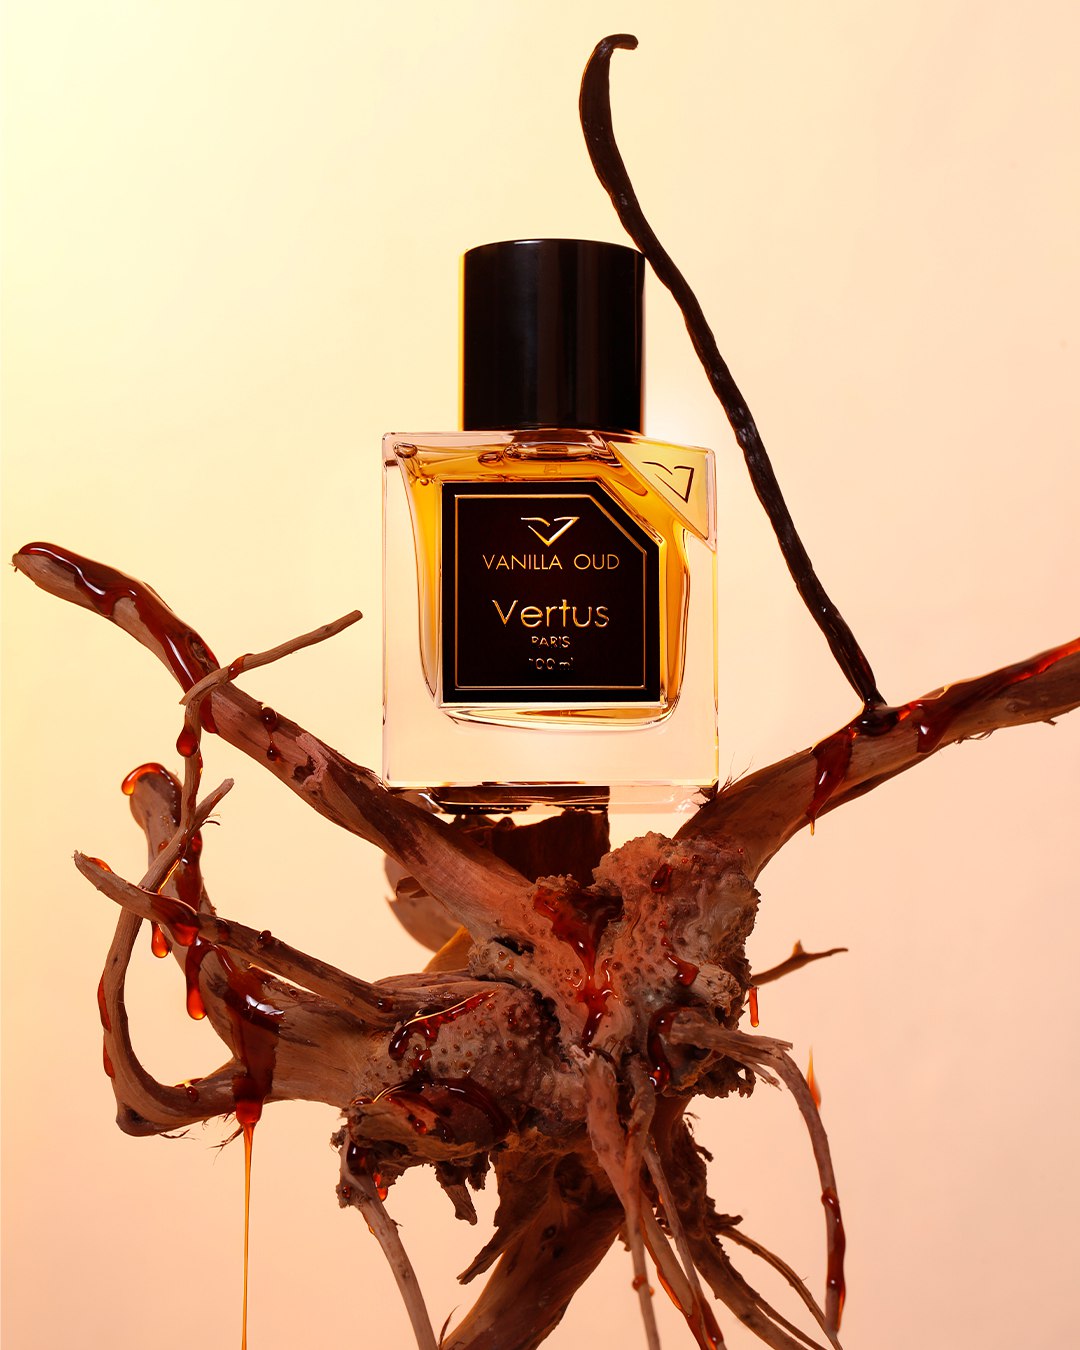 Vanilla Oud Vertus perfume